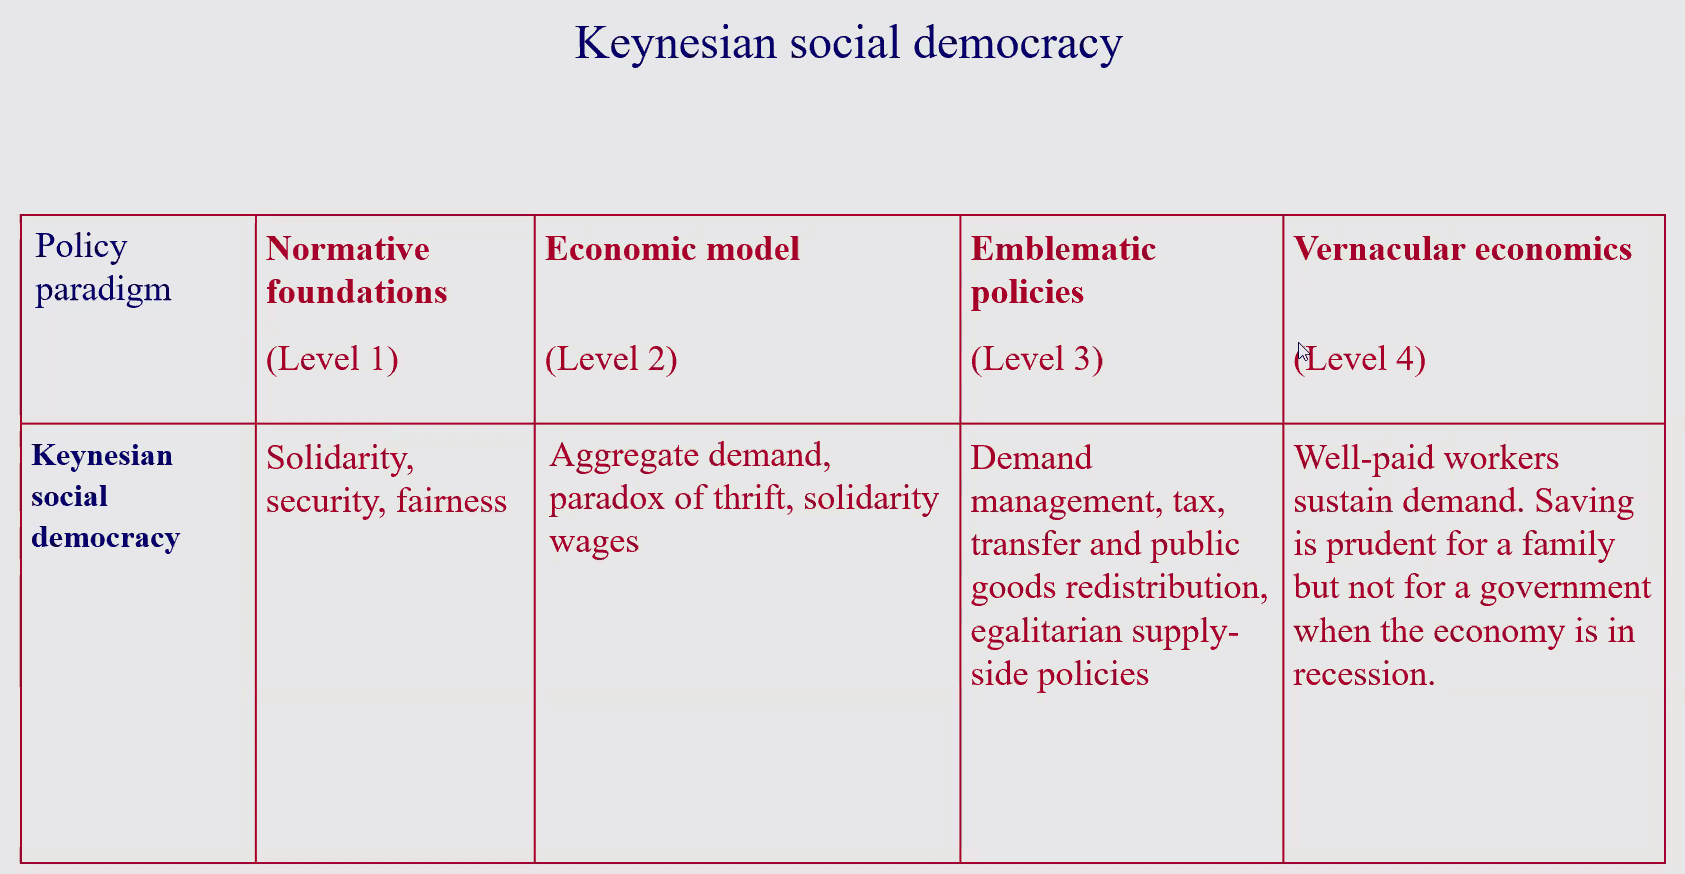 02 Keynesian social democracy